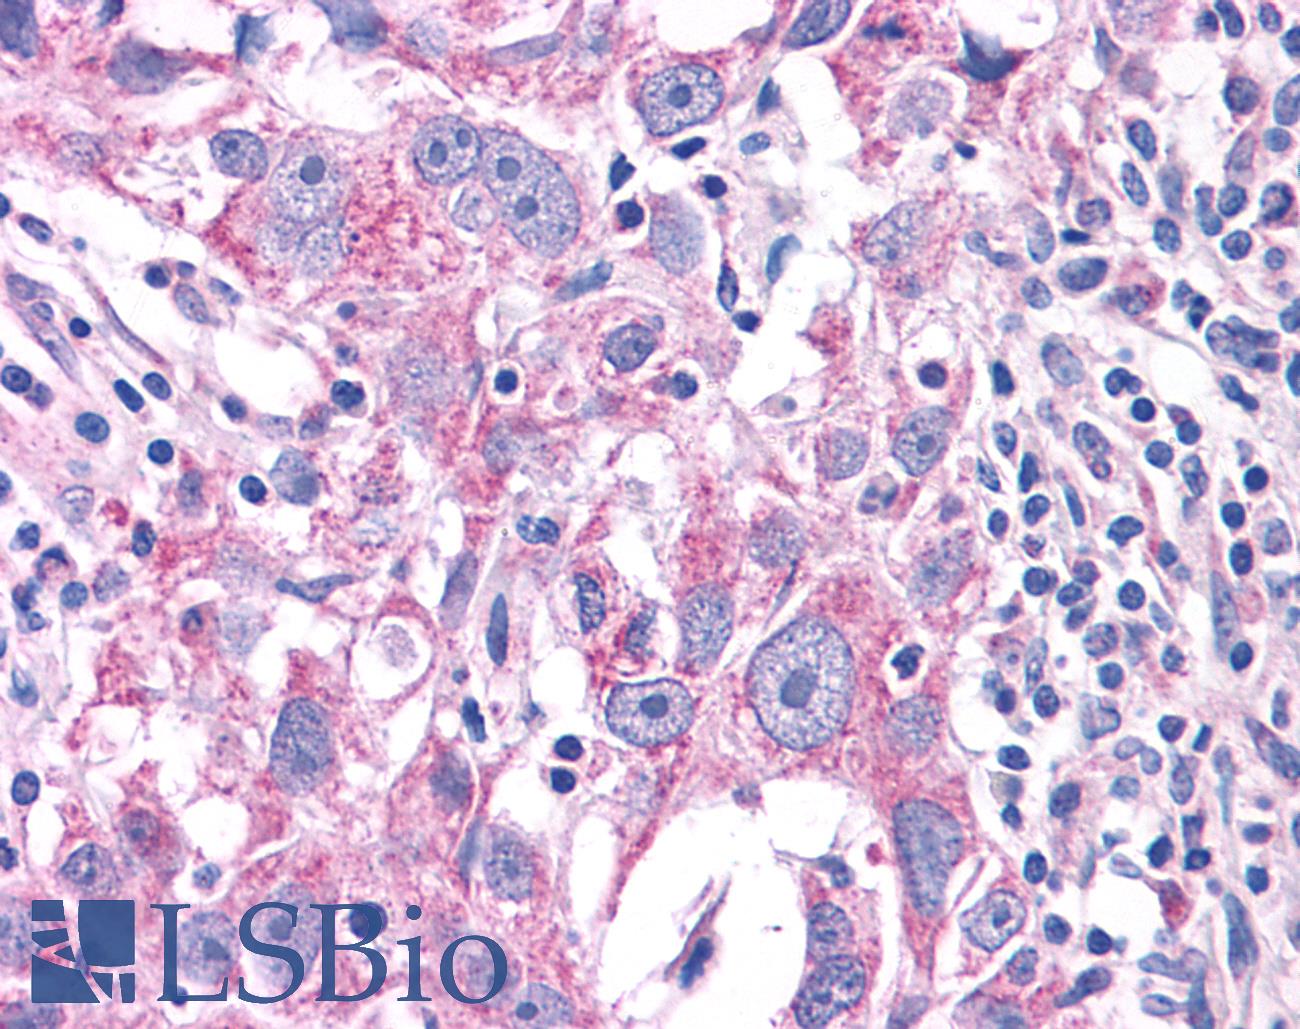 NEK6 Antibody - Breast, Carcinoma